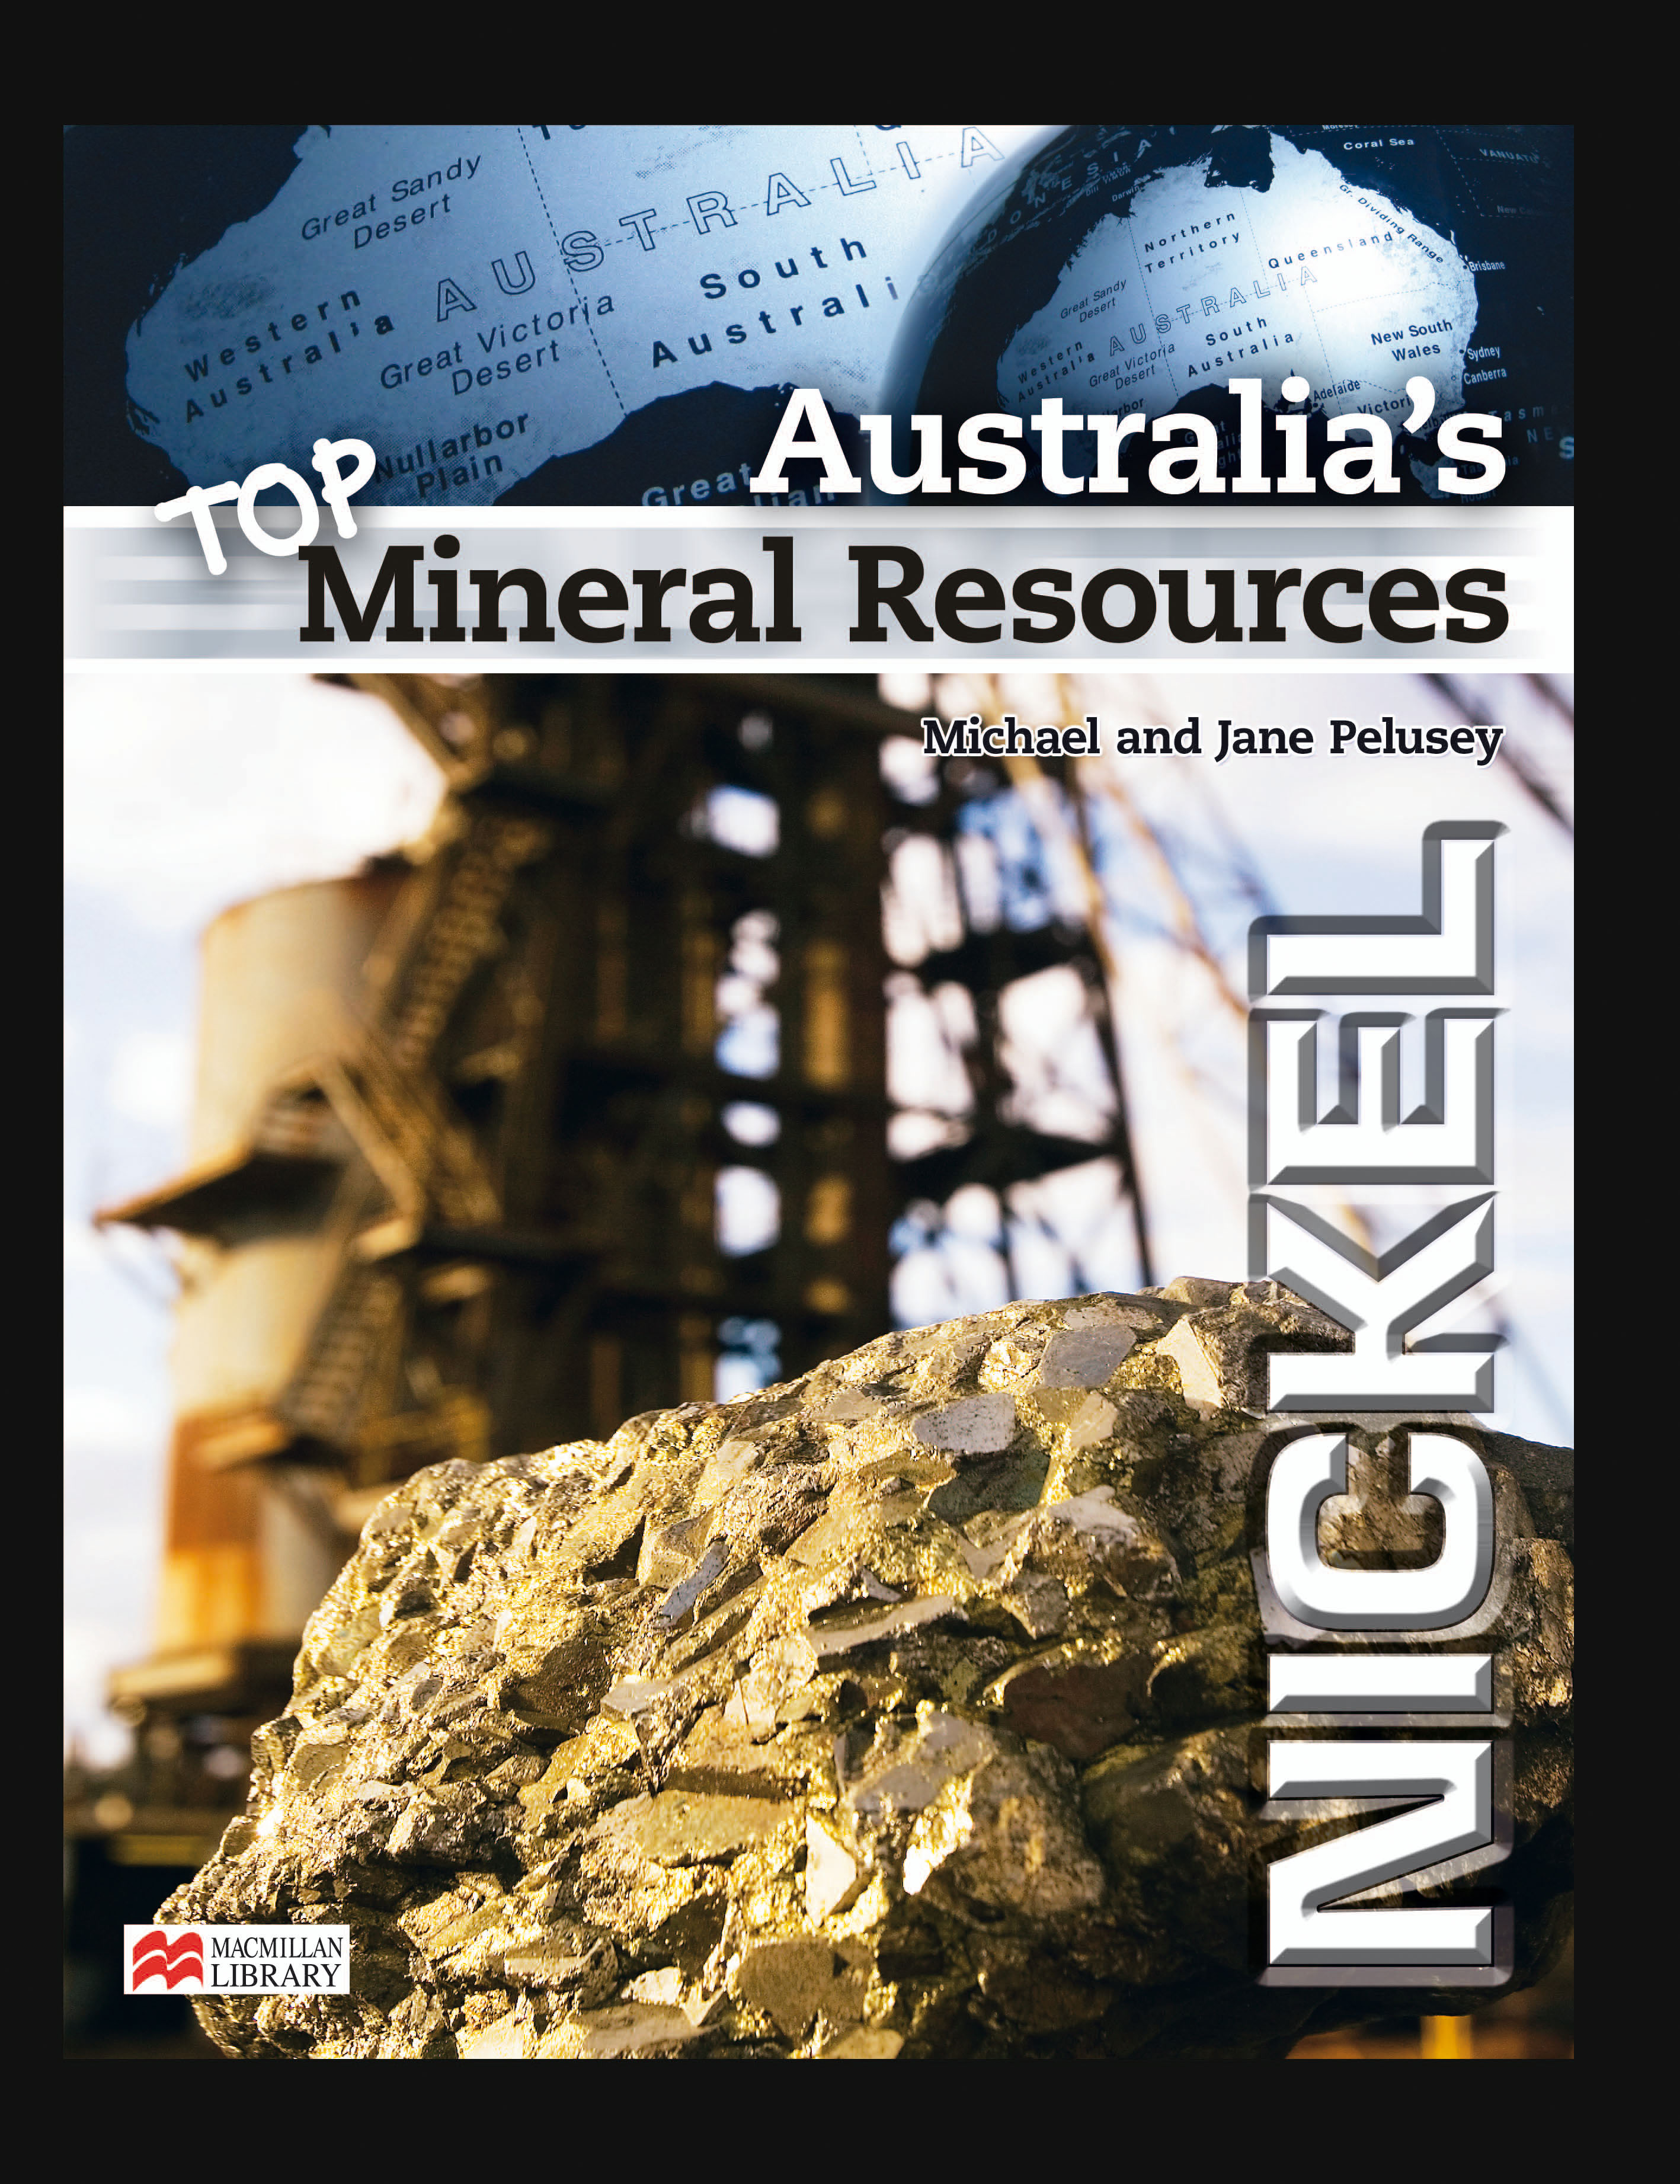 Australia's Top Mineral Resources